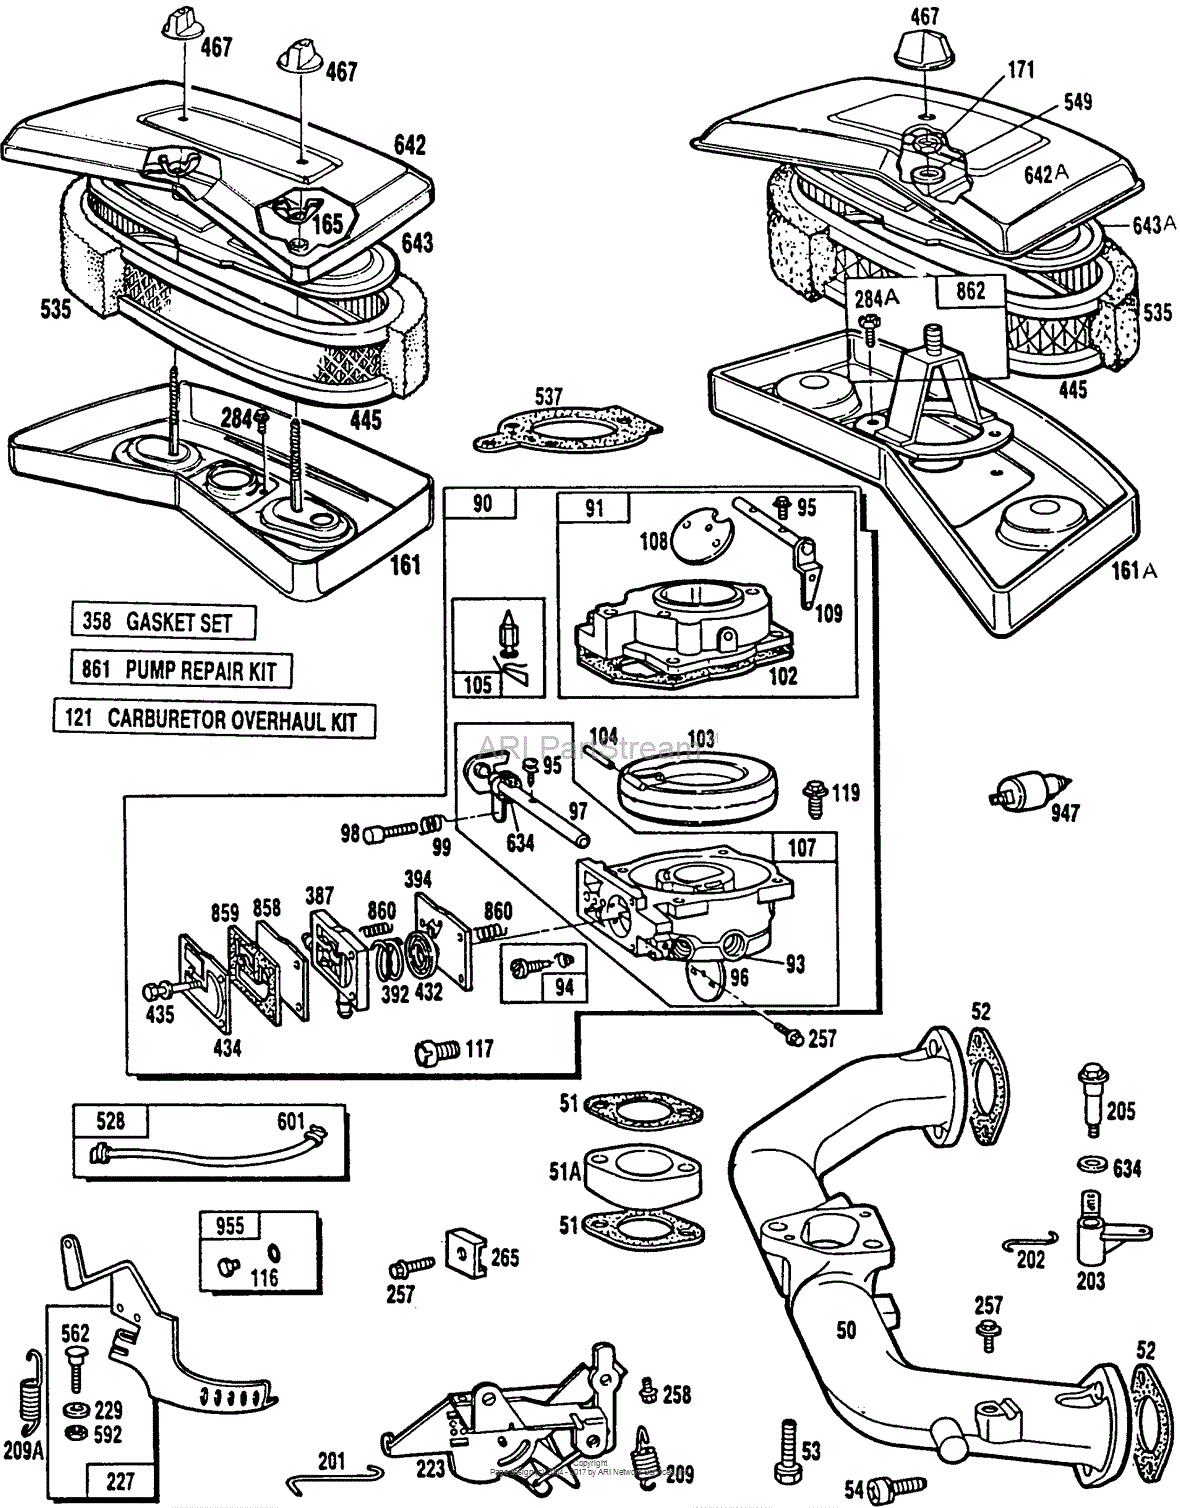 Briggs and Stratton 404707012601 Parts Diagram for Carburetor